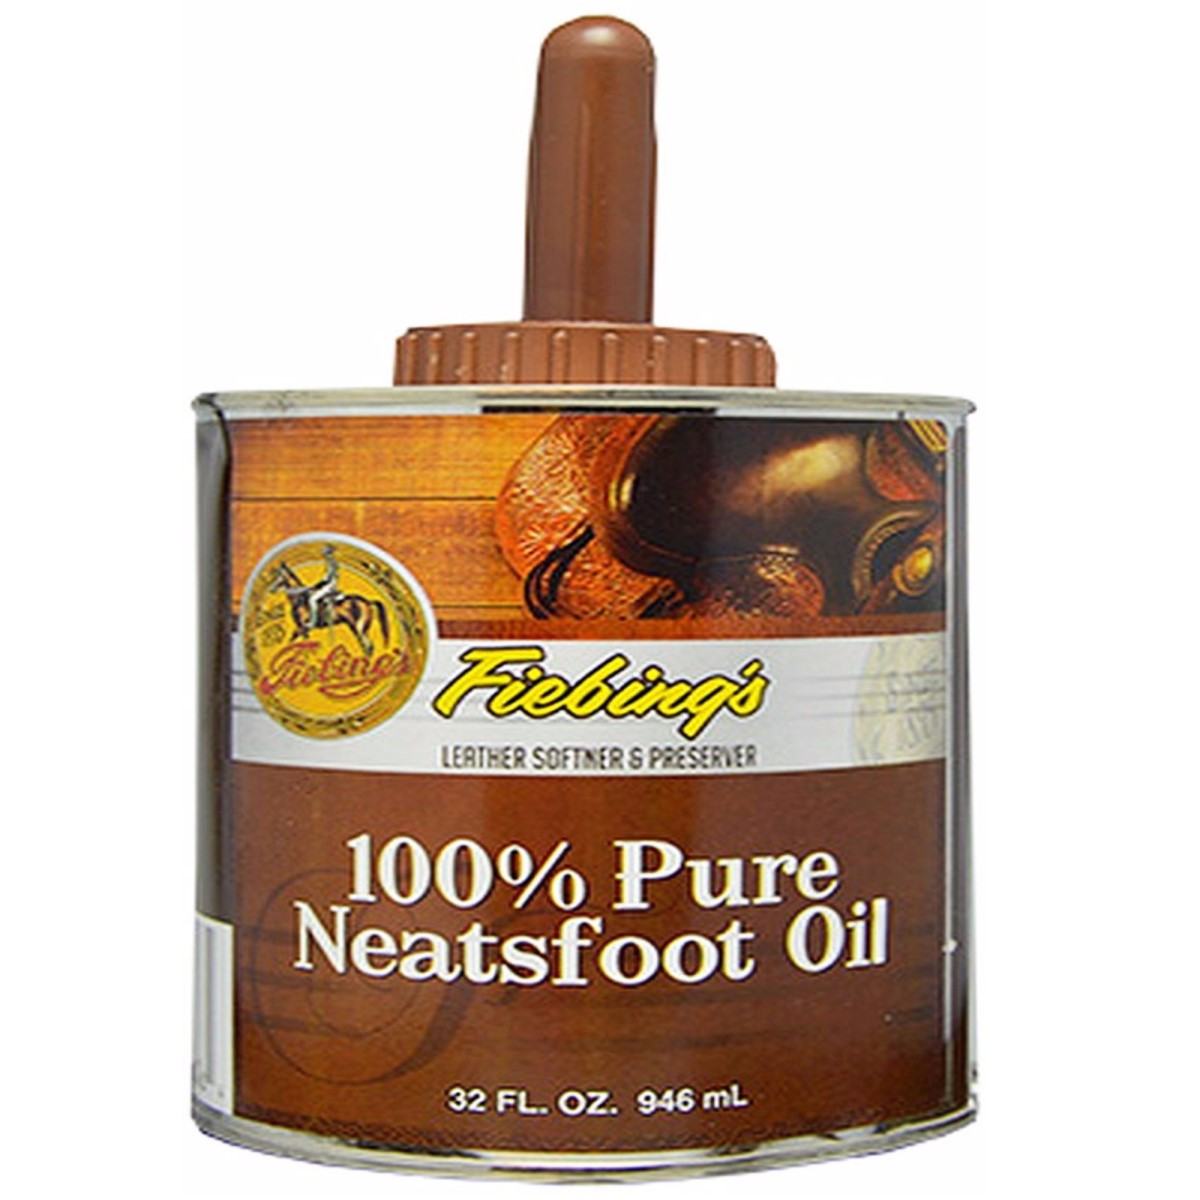 Fiebing's 100% Pure Neatsfoot Oil with Applicator, 32 oz.